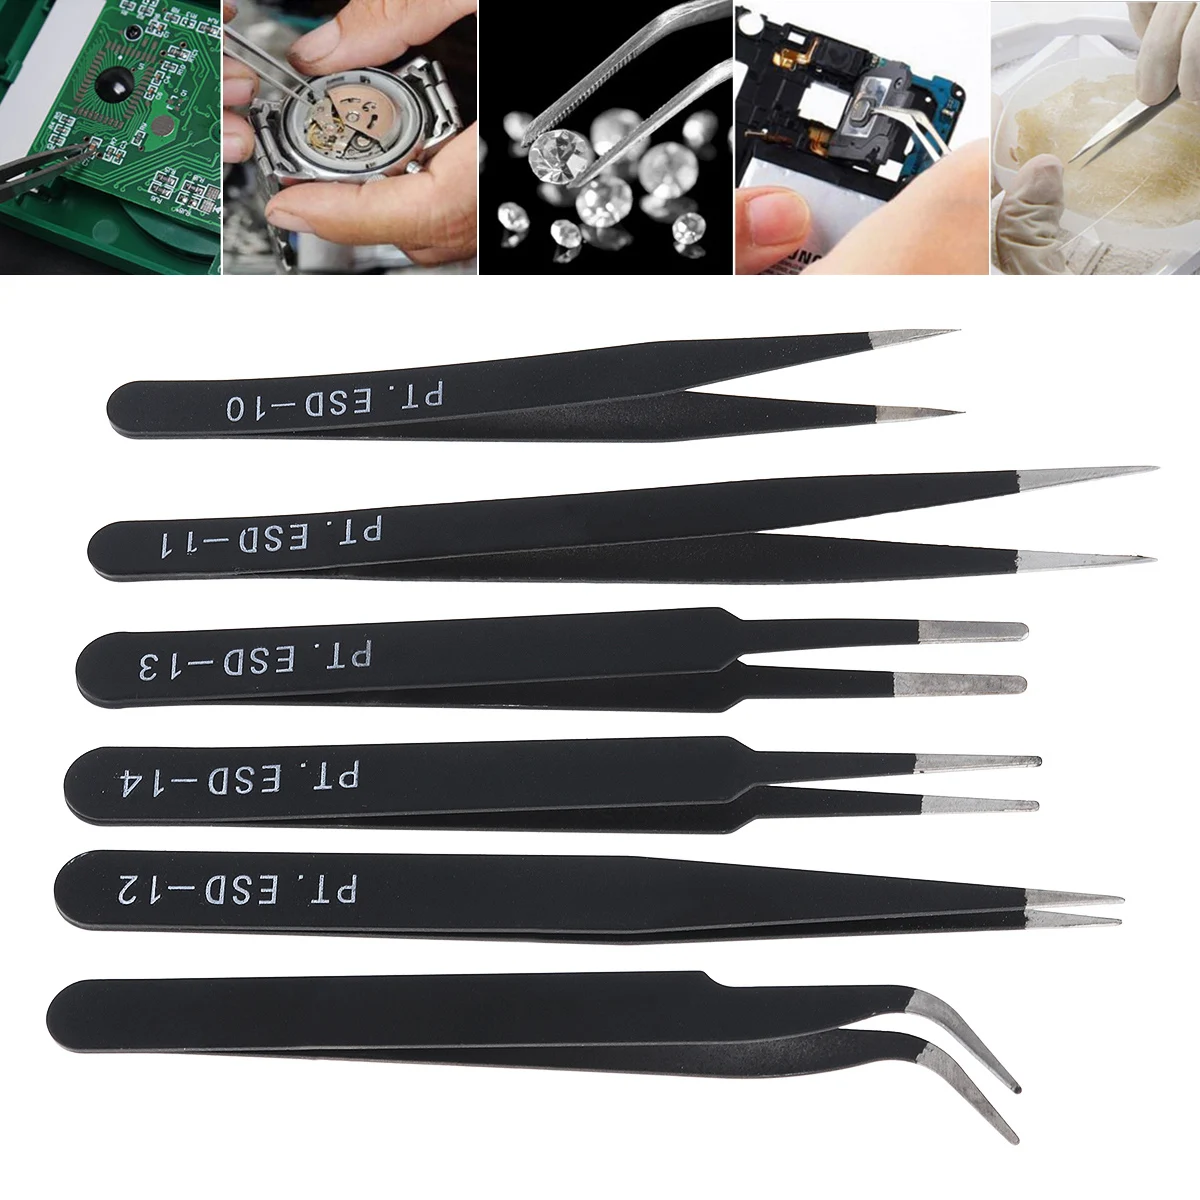 

6/9Pcs Precision Tweezer Set ESD Anti Static Stainless Steel Tweezers Repair Tools Kit for Electronics Soldering Craft Hand Tool